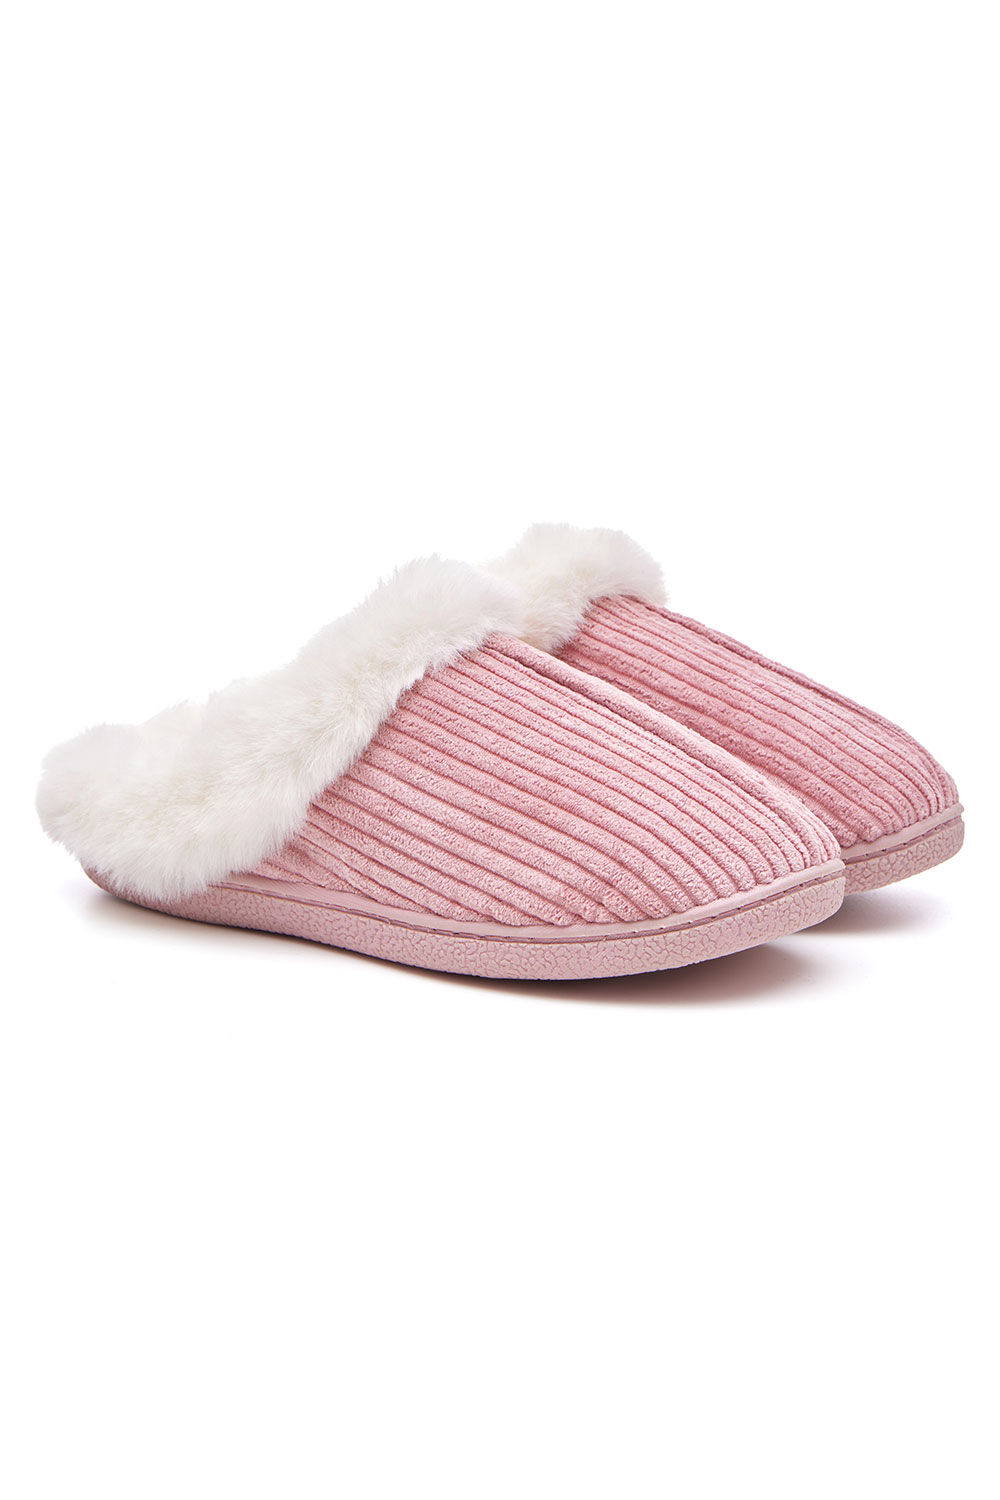 Bonmarche Pink Velvet Fur Trimmed Slippers, Size: 3